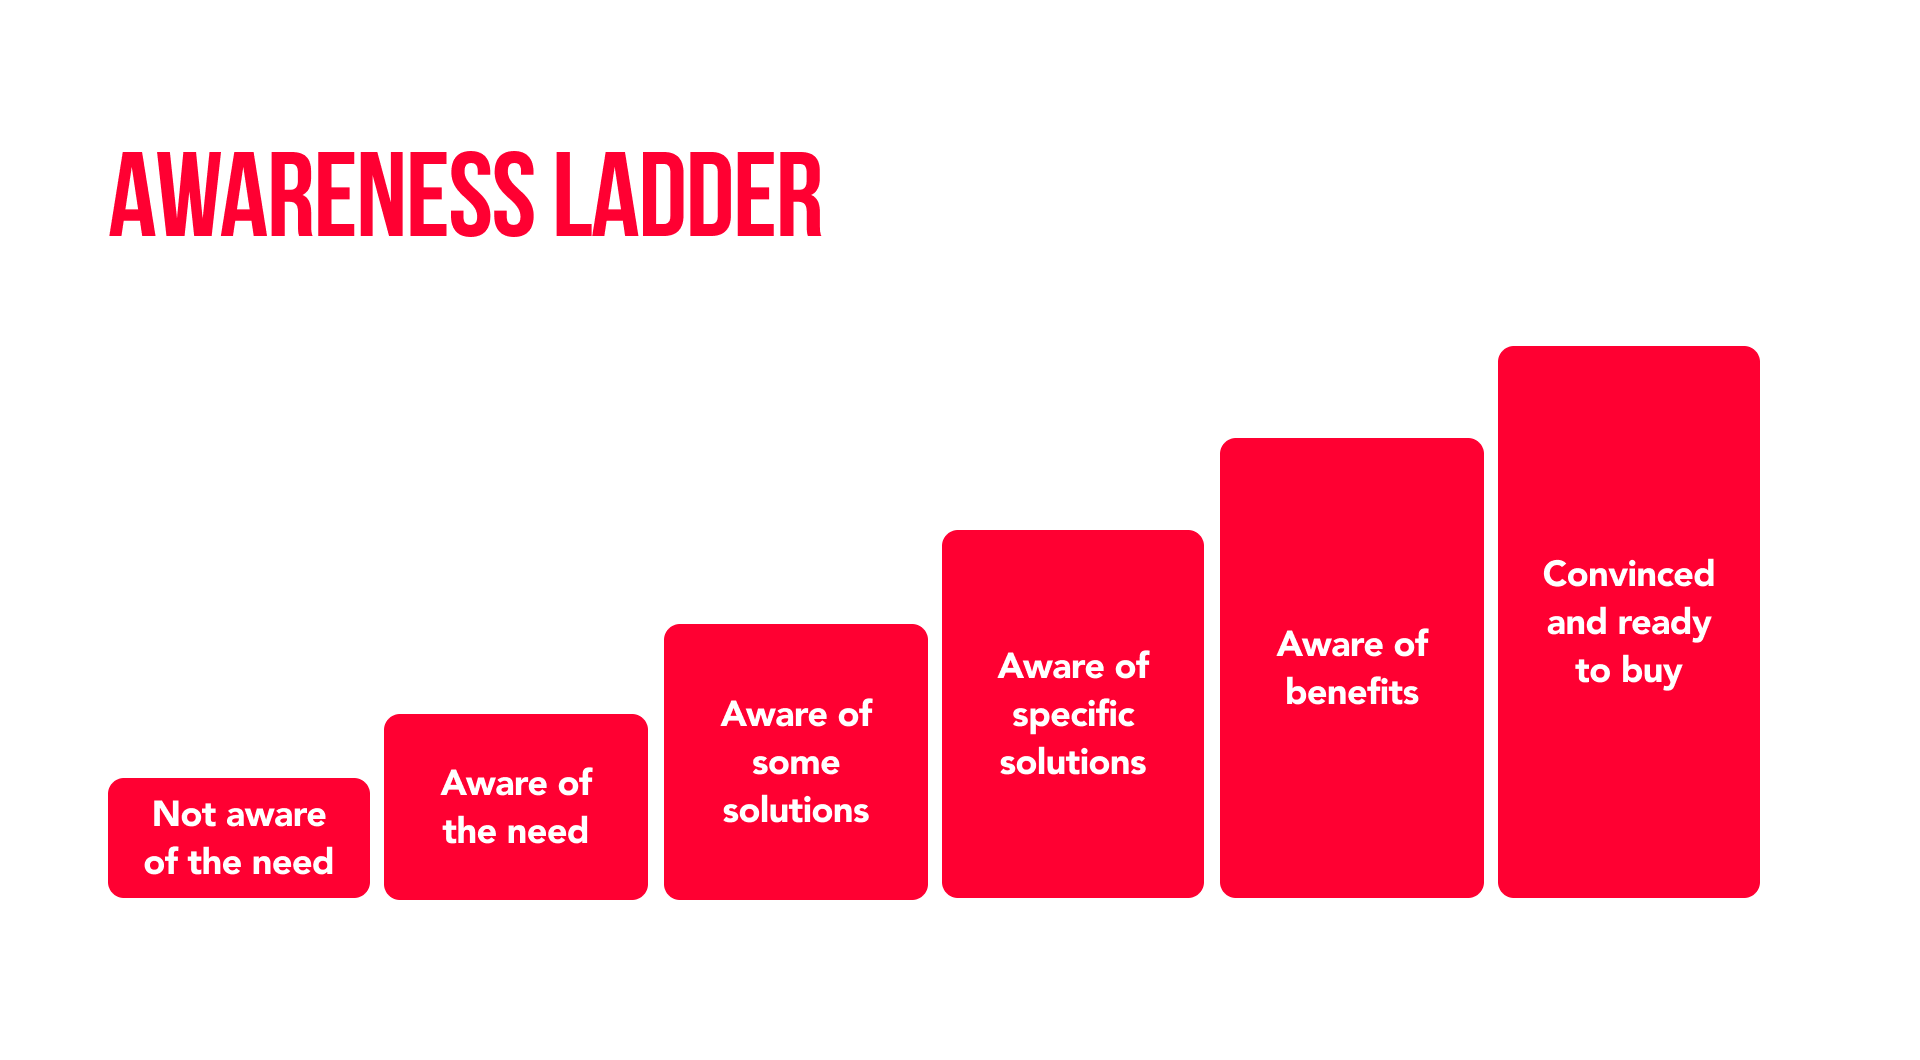 Awareness ladder